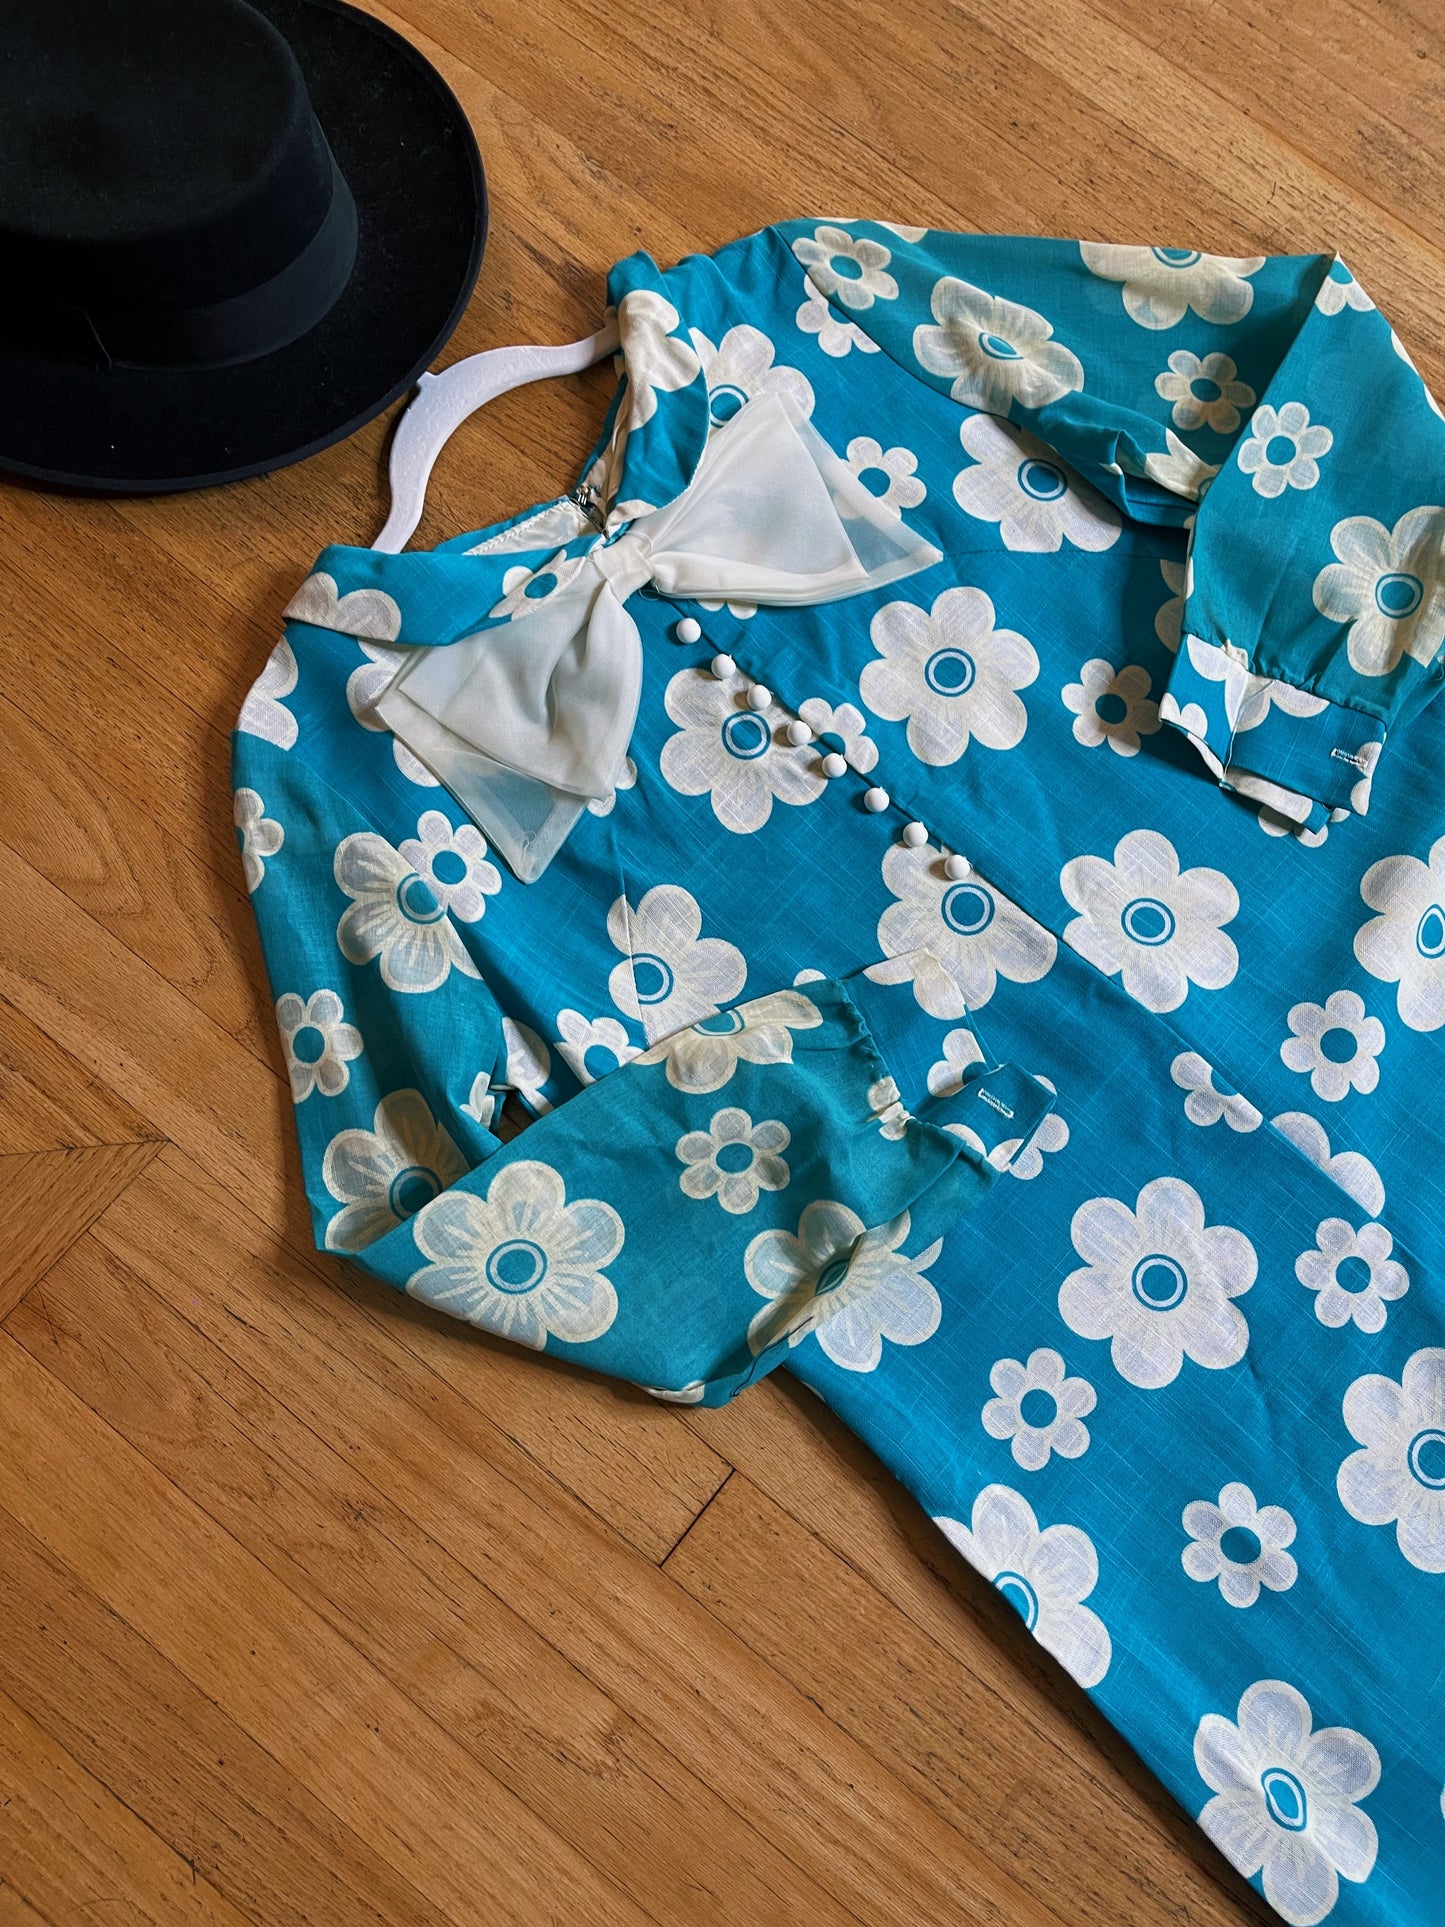 Vintage 60s Deadstock Flower Power Teal Collar Dress Fits Sizes S-M